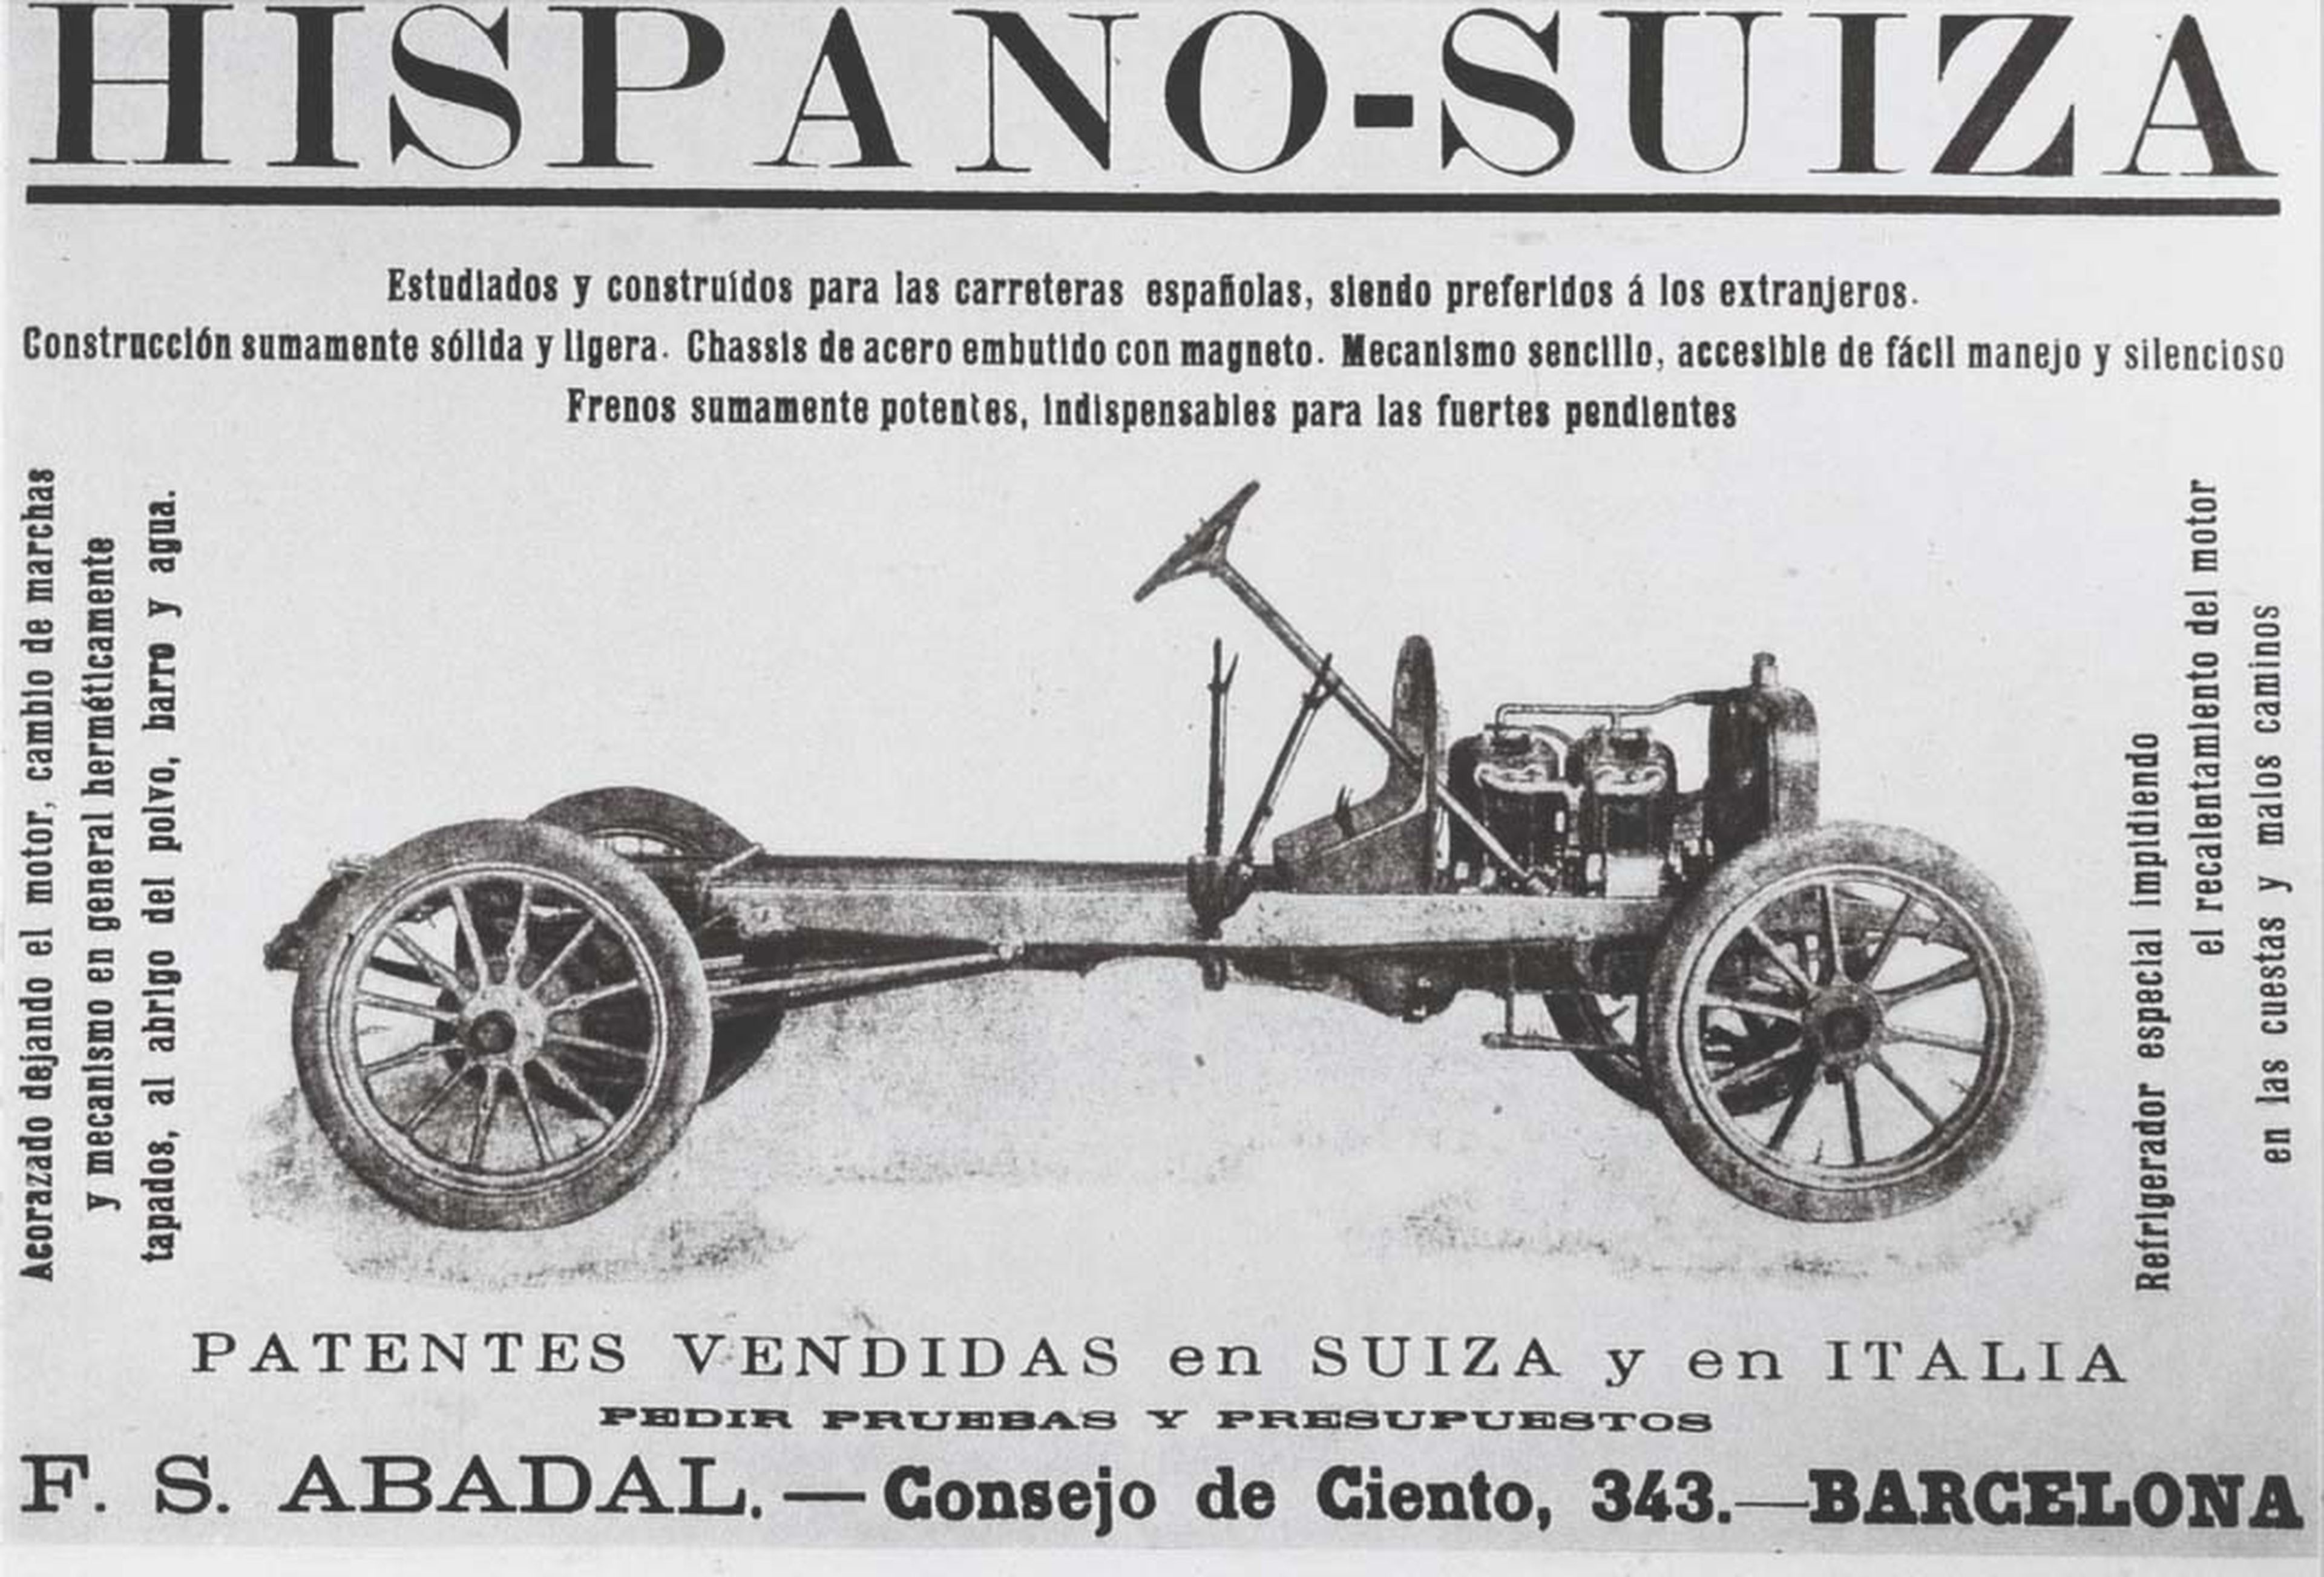 ¿Quién mató a Hispano-Suiza?